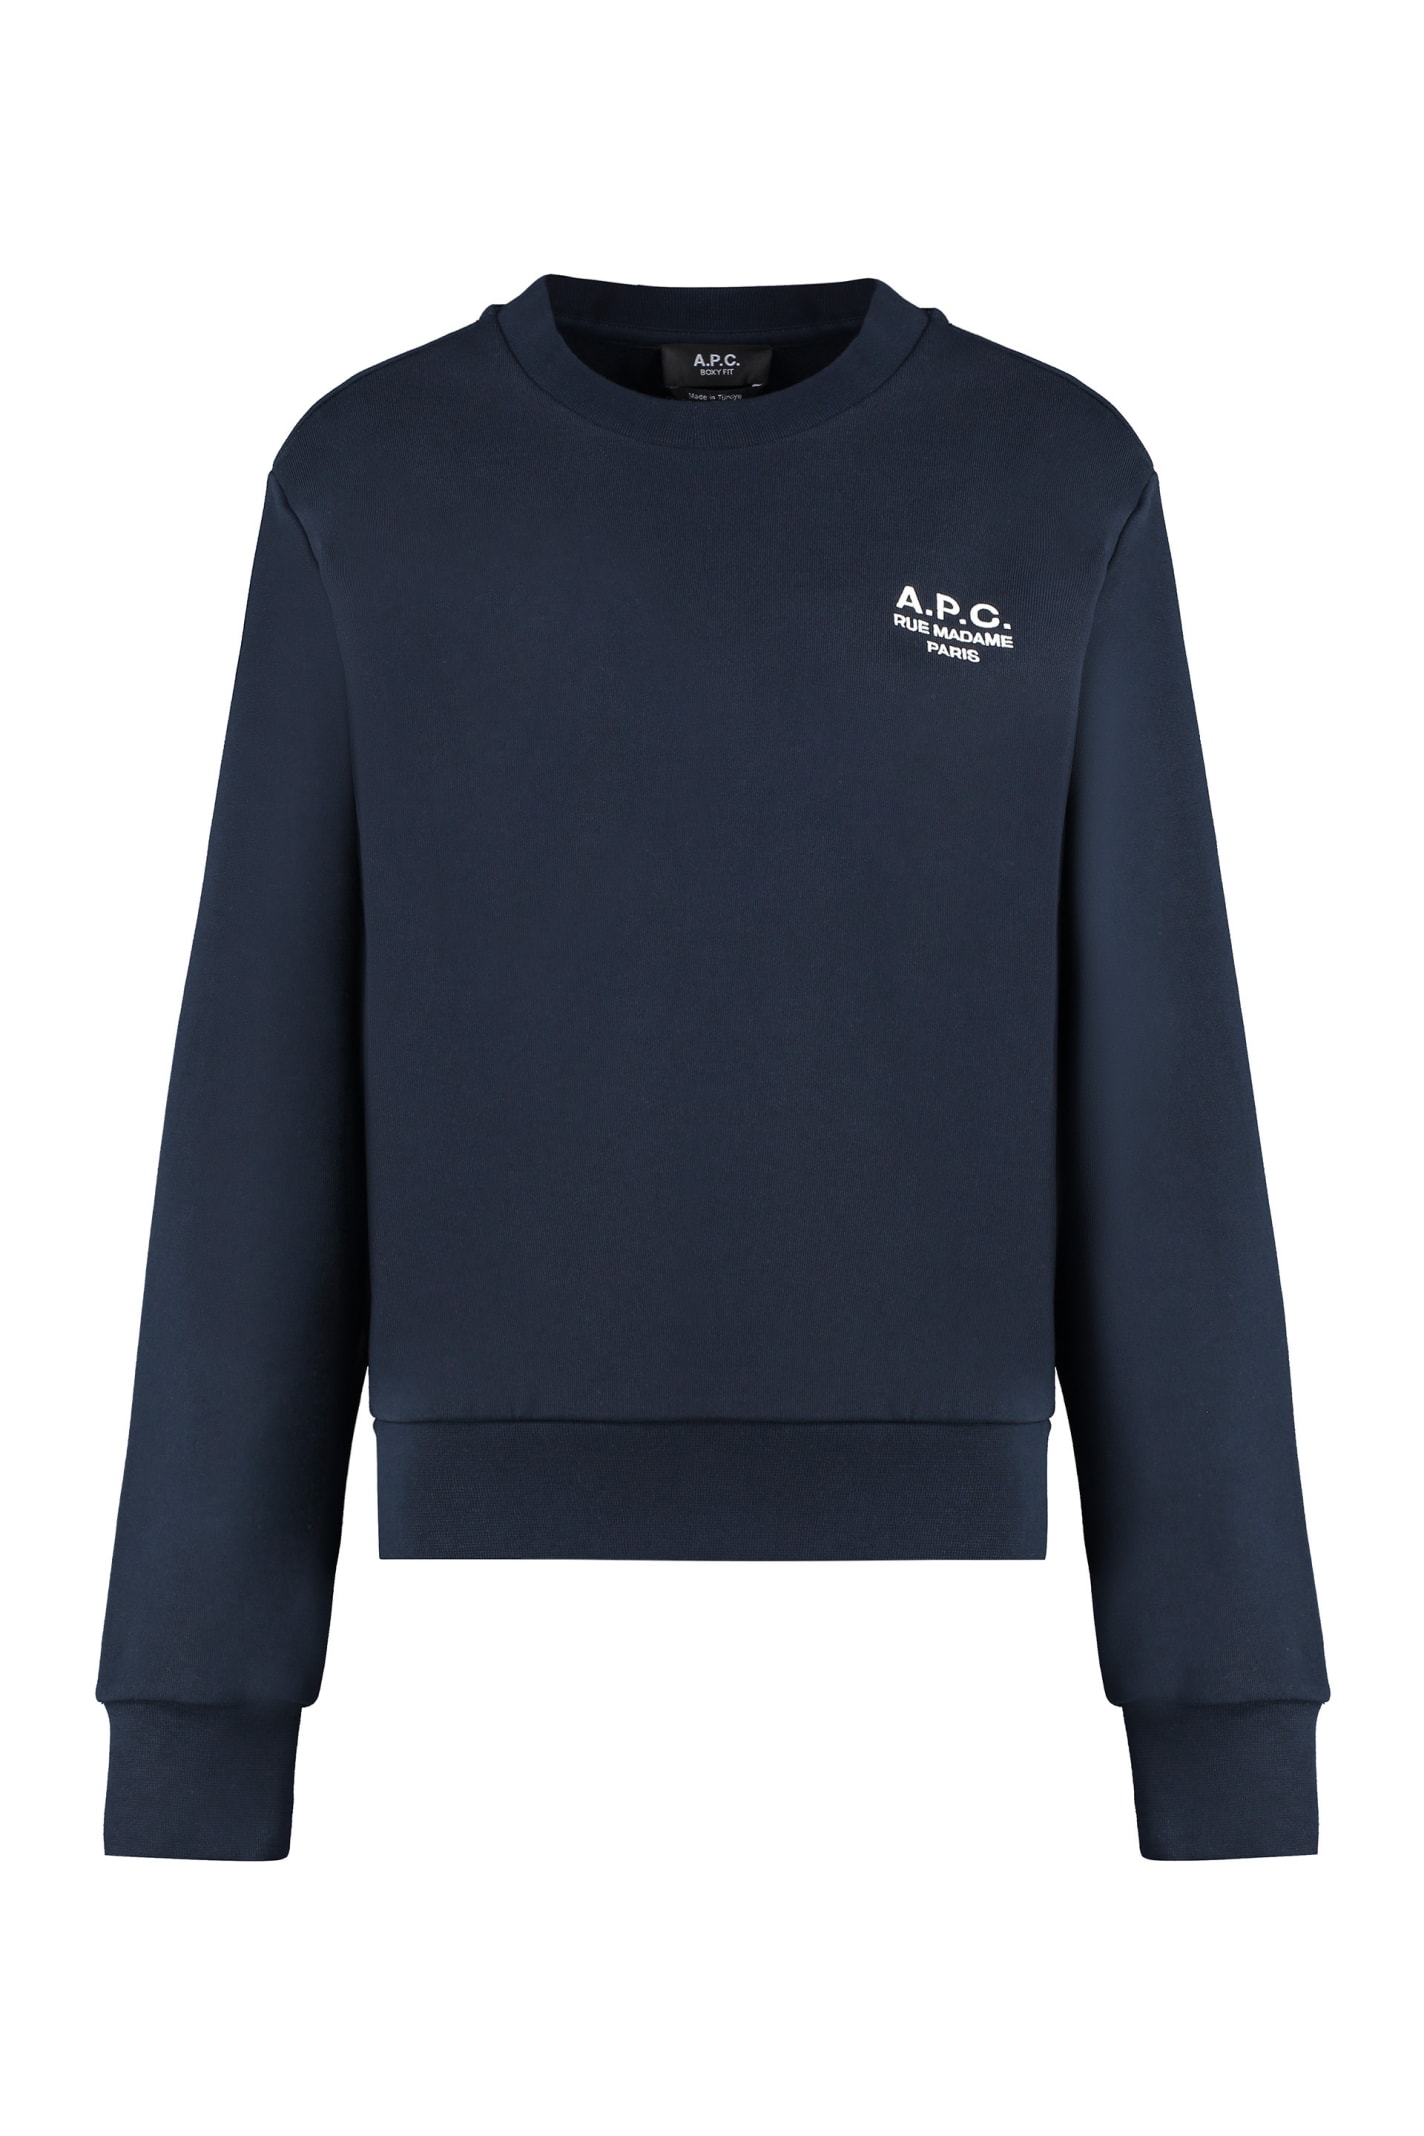 A. P.C. Boxy Rue Madame Cotton Crew-neck Sweatshirt